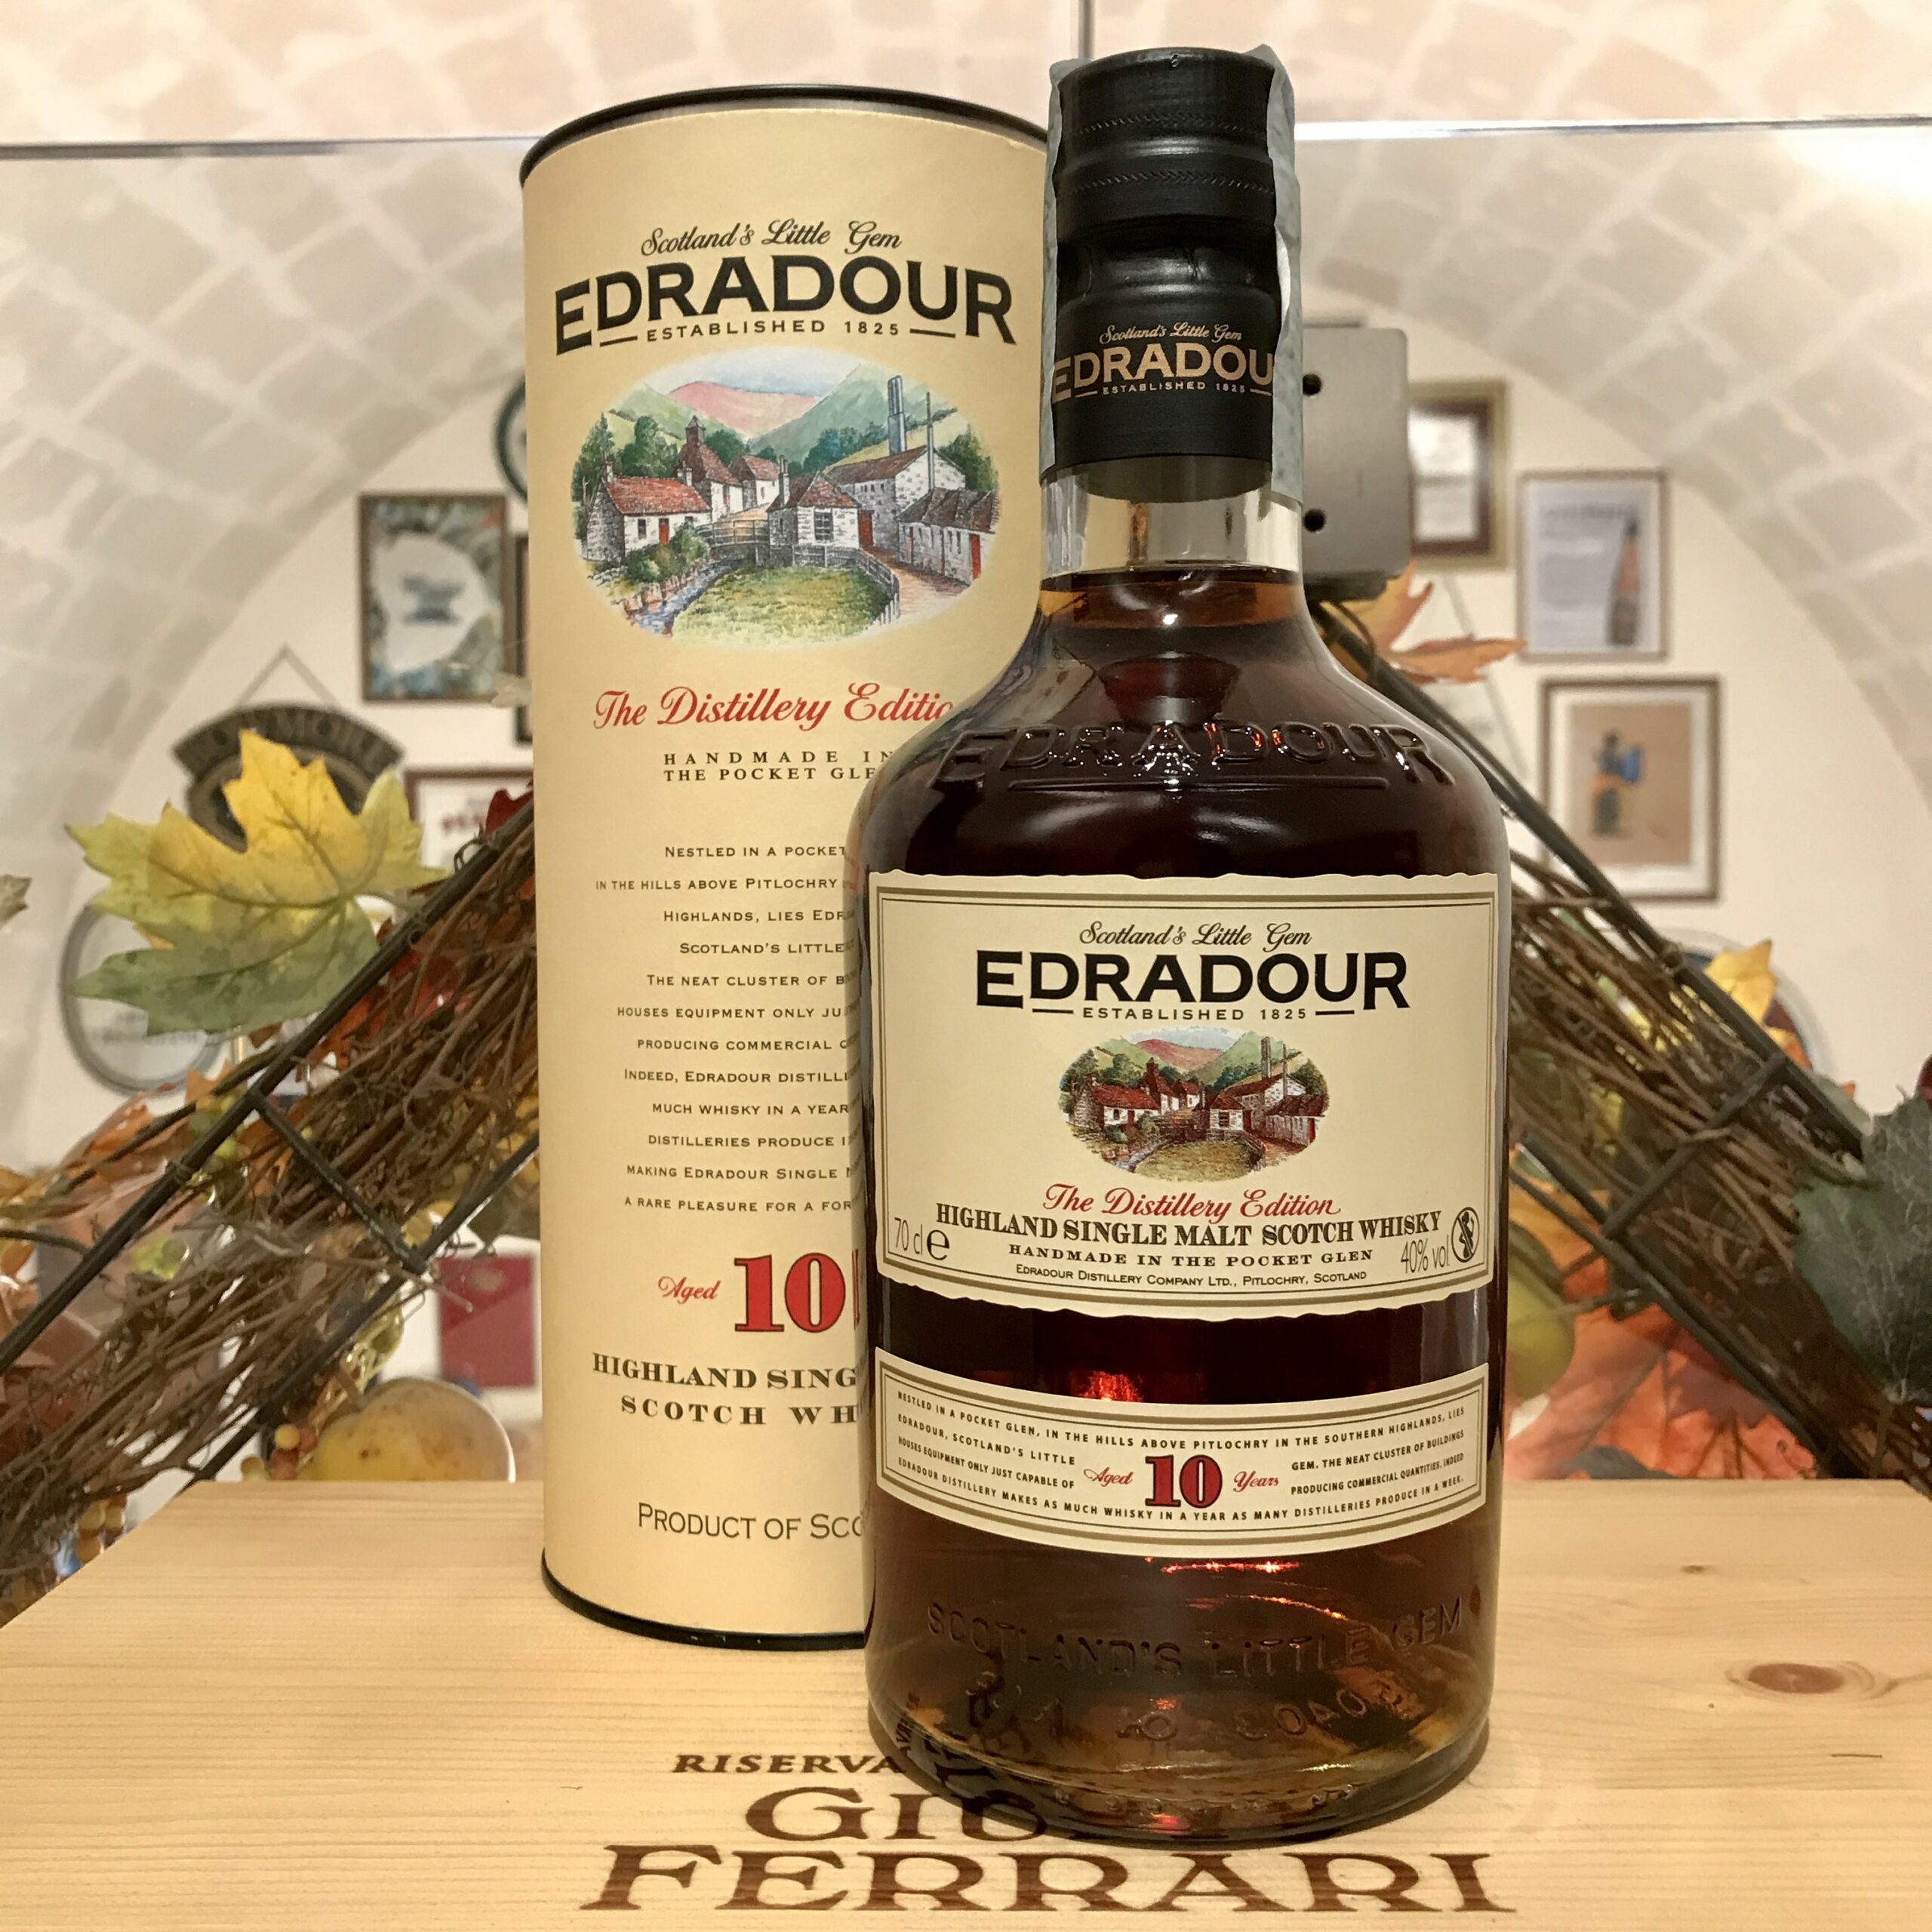 Edradour Highland Single Malt Scotch Whisky The Distillery Edition 10 YO